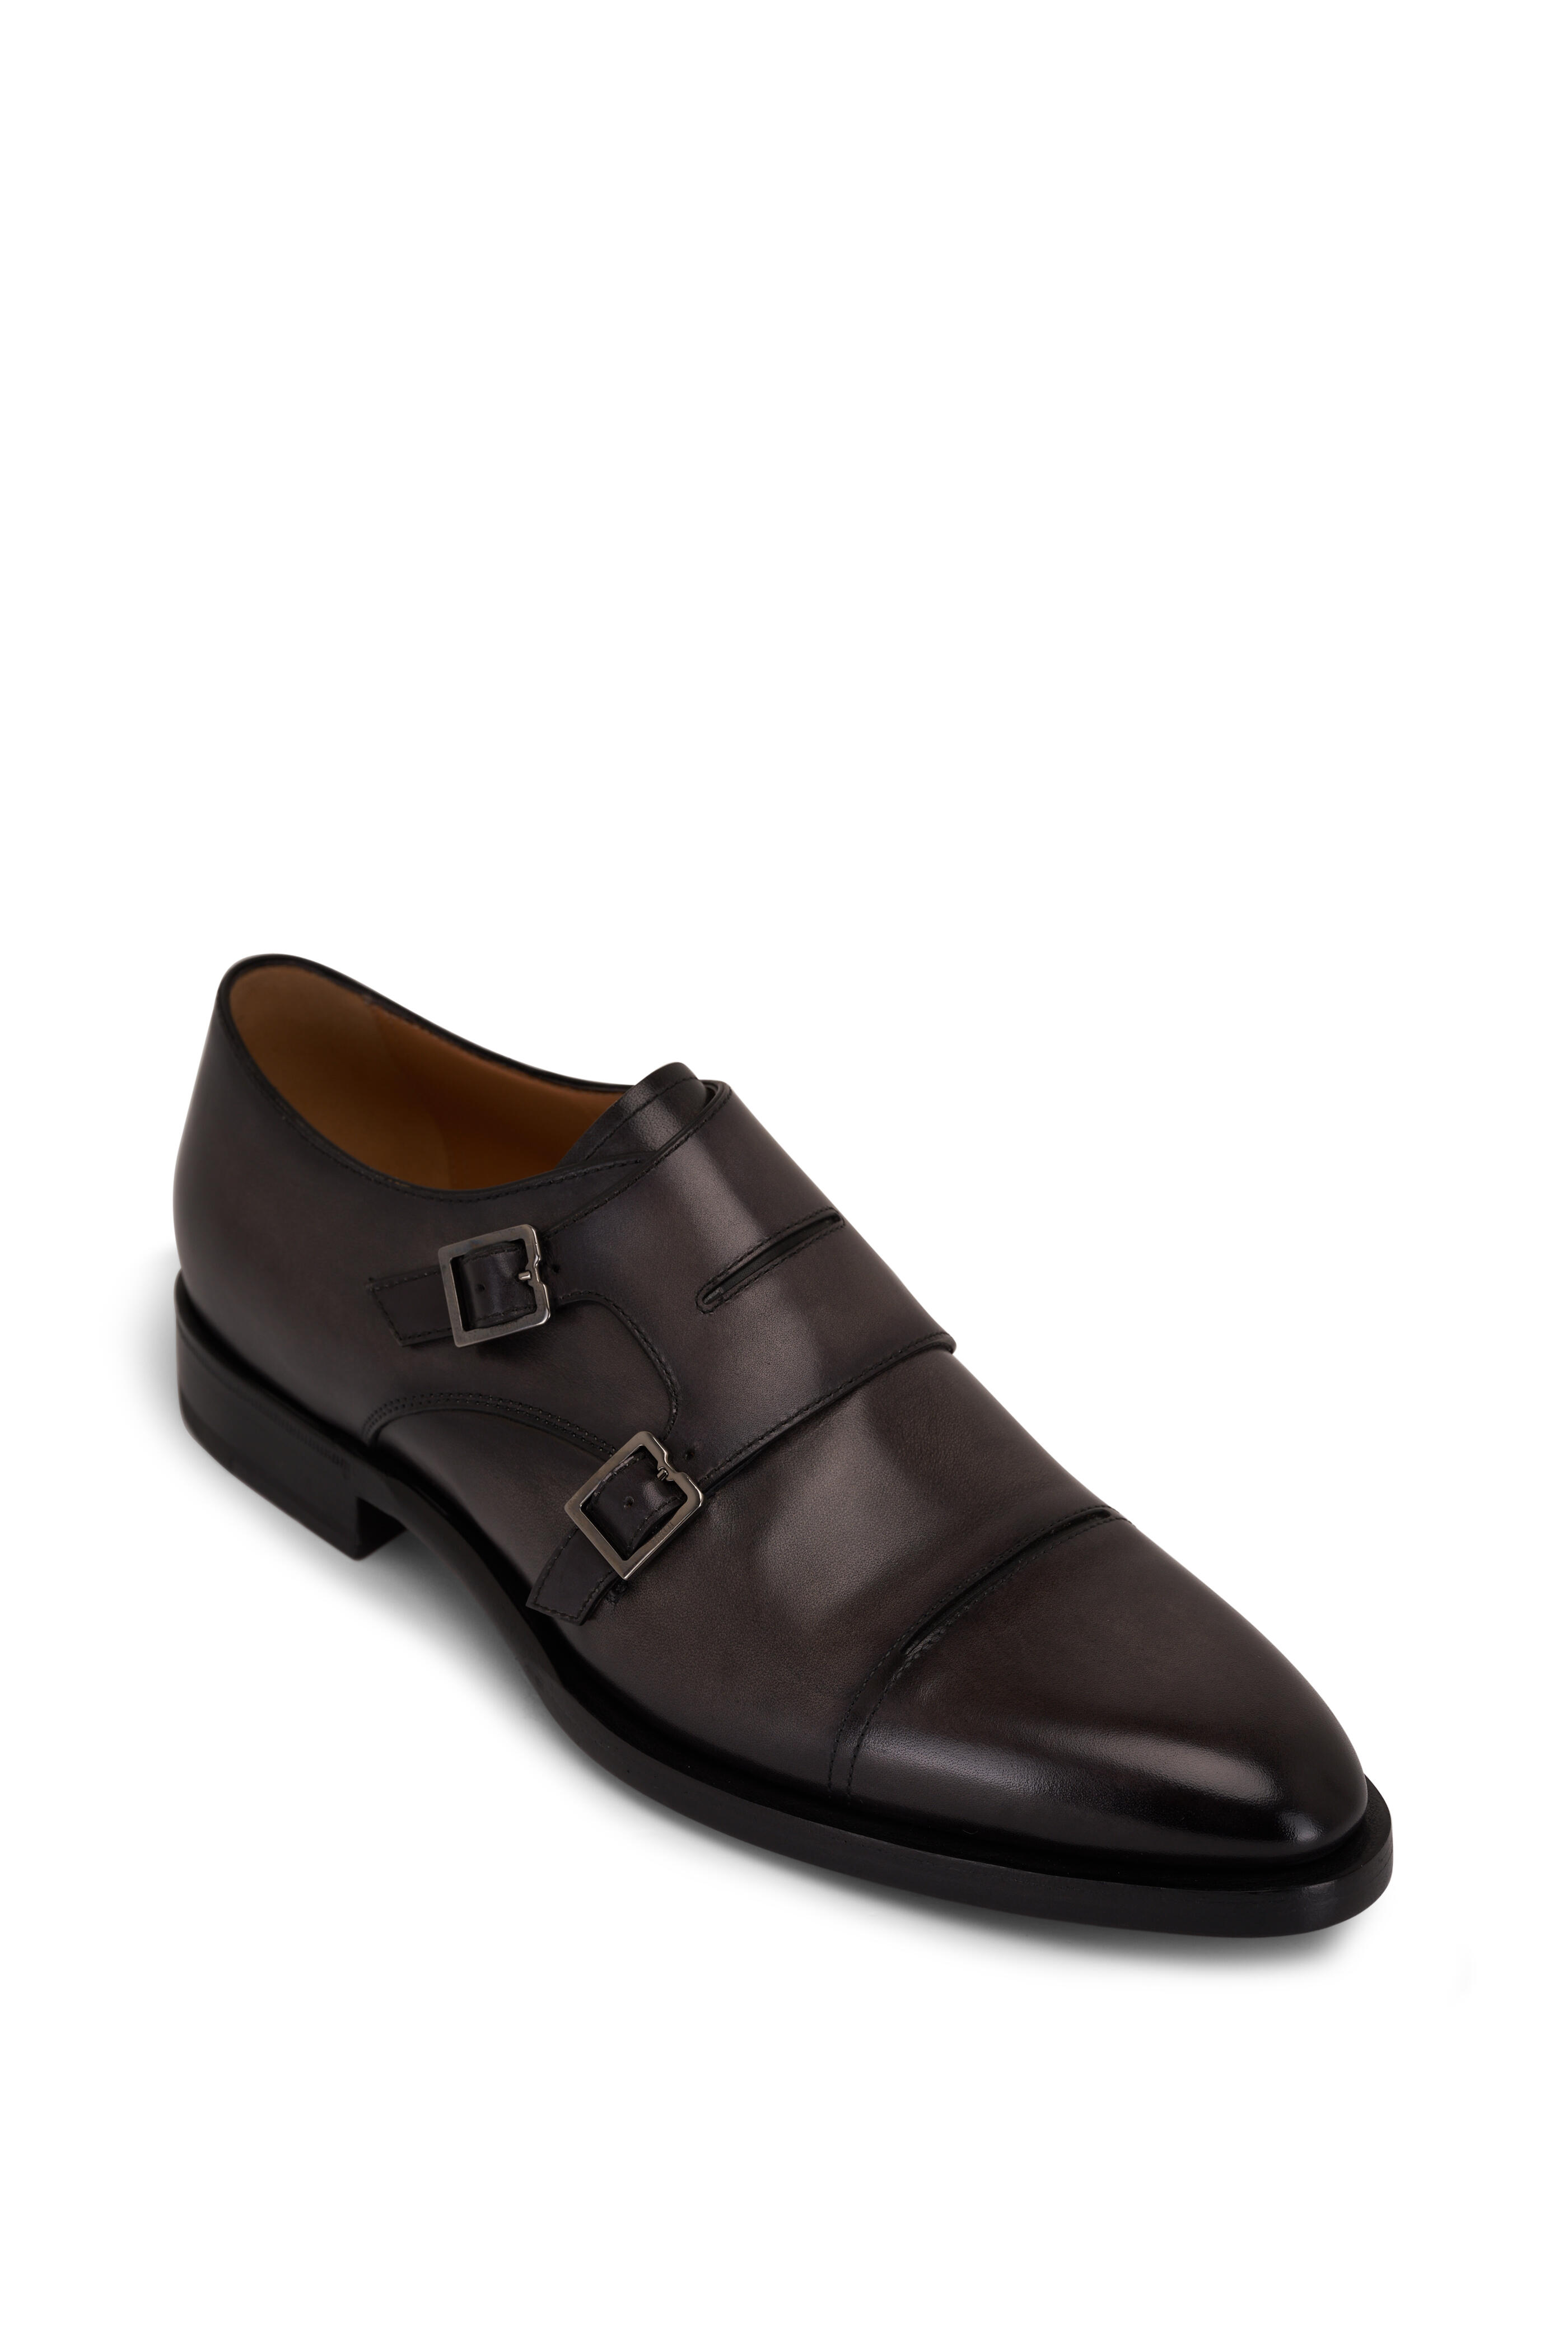 Berluti - Black Leather Double Monk Strap Dress Shoe